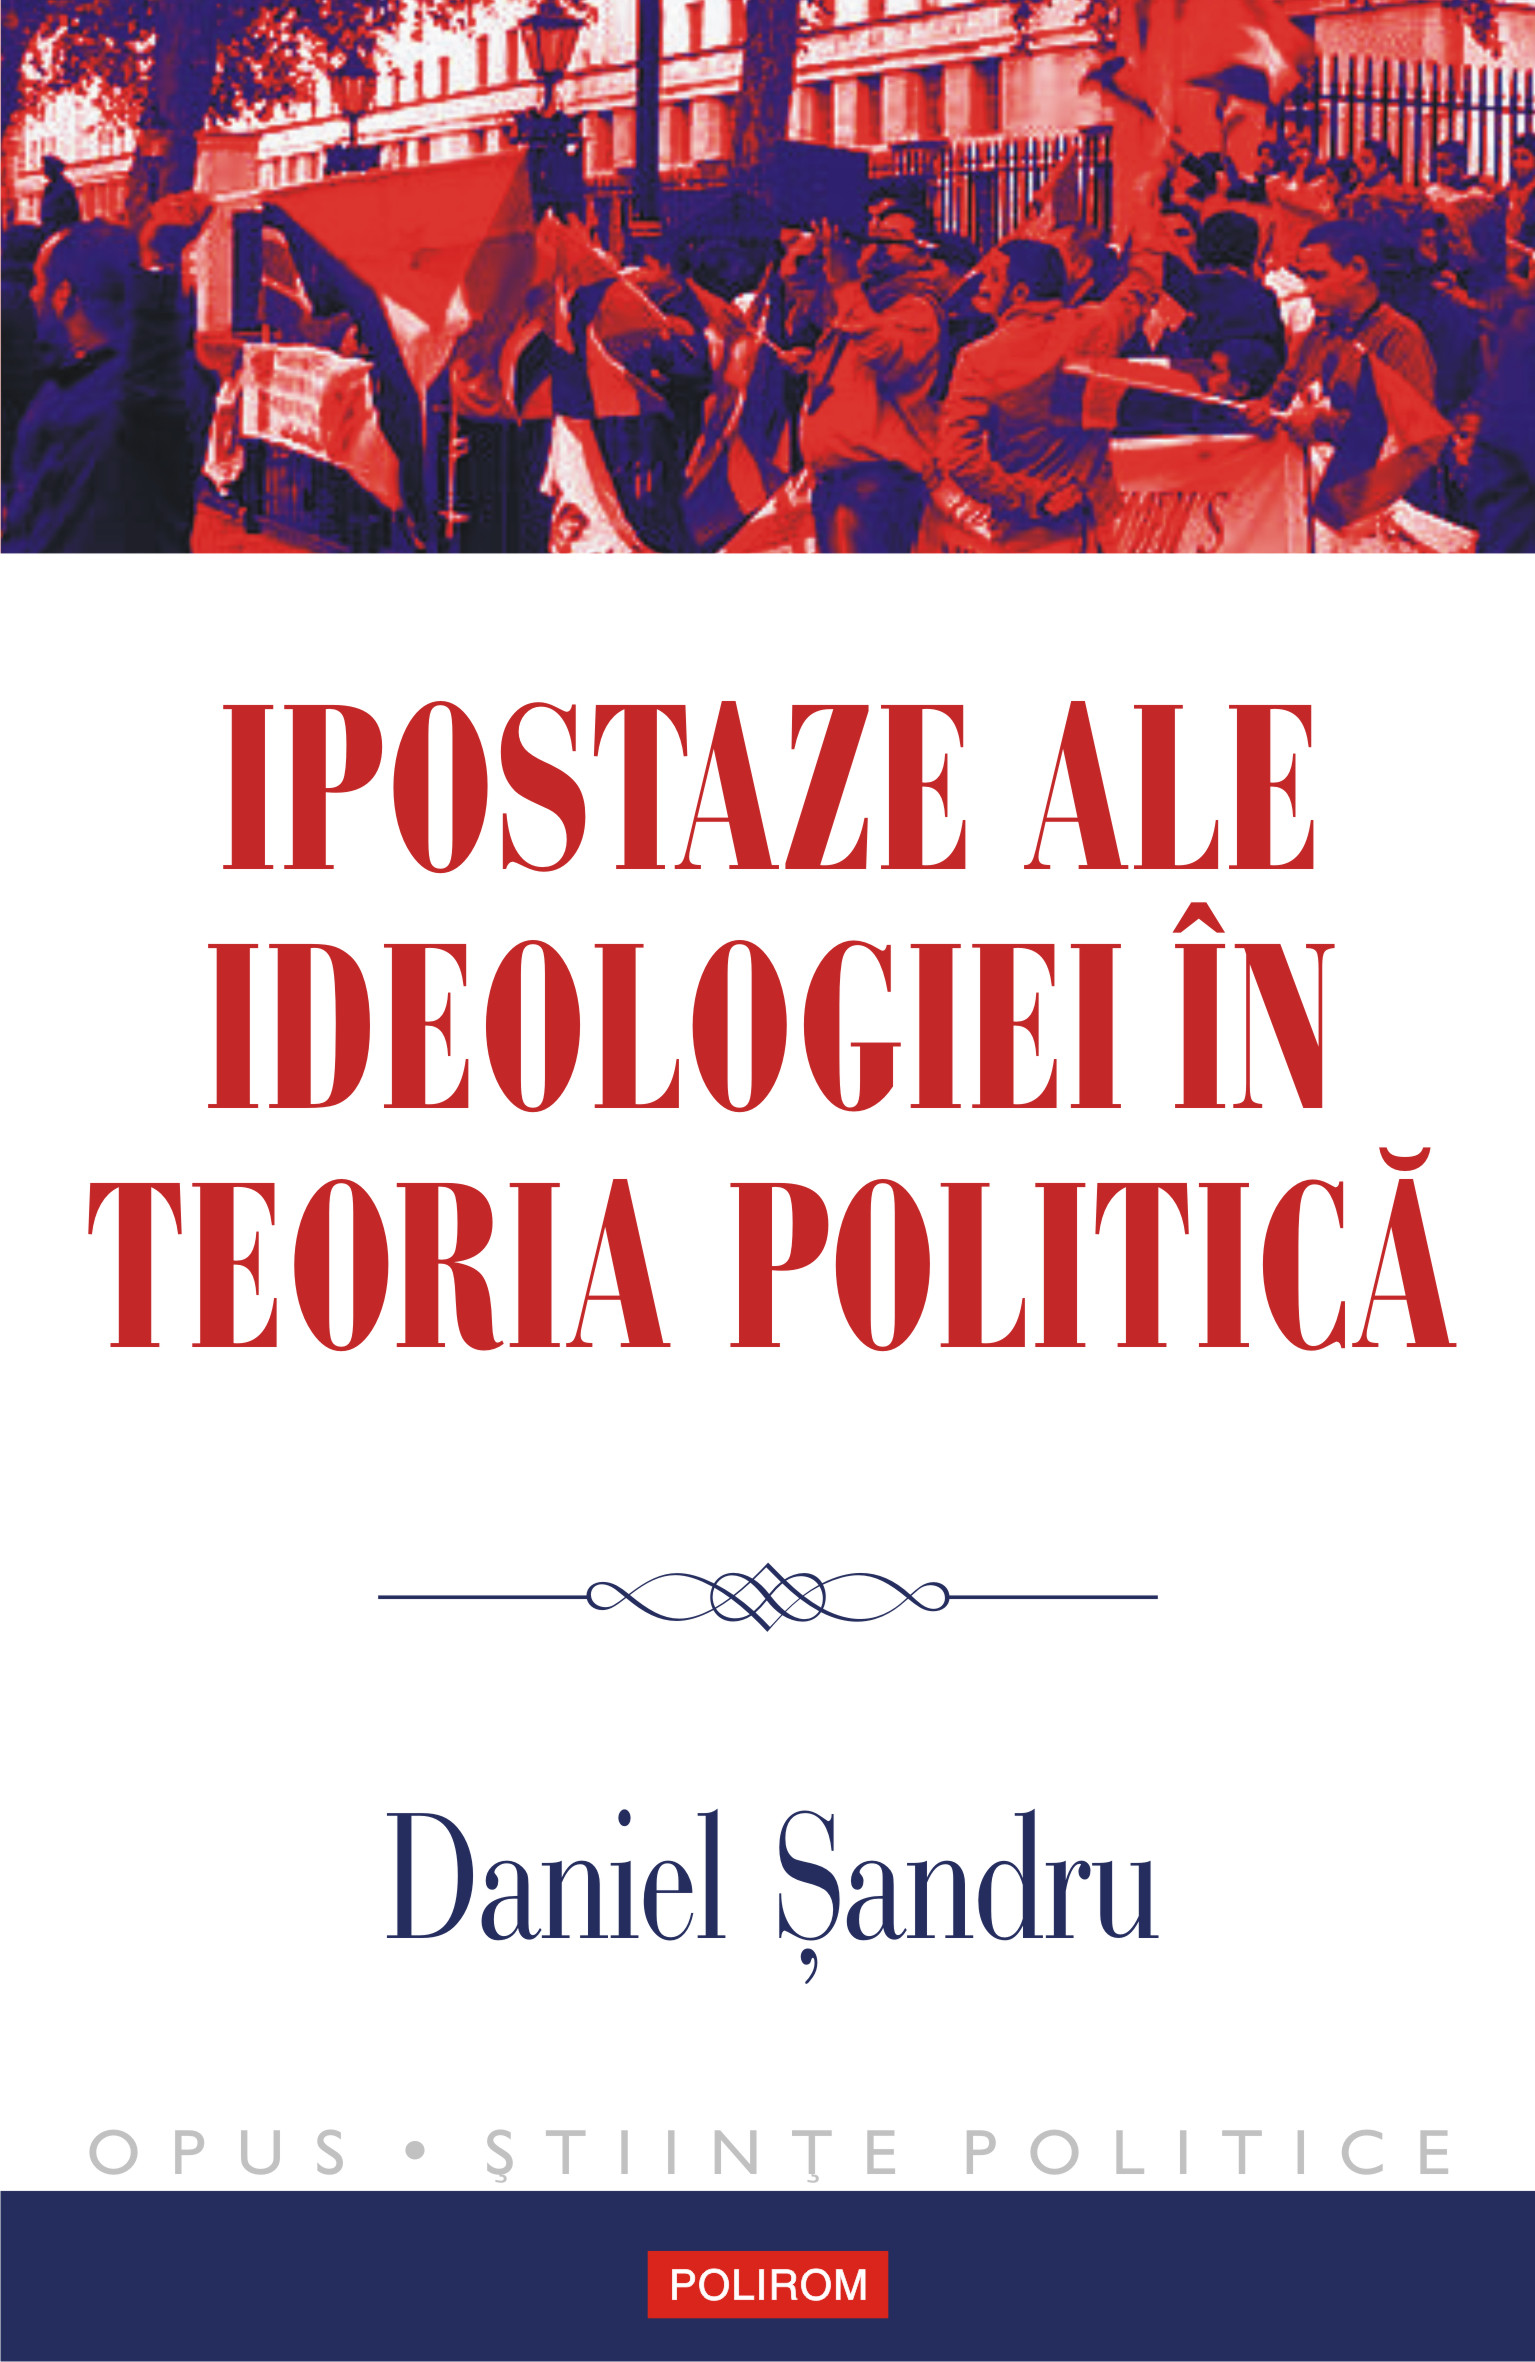 eBook Ipostaze ale ideologiei in teoria politica - Daniel sandru